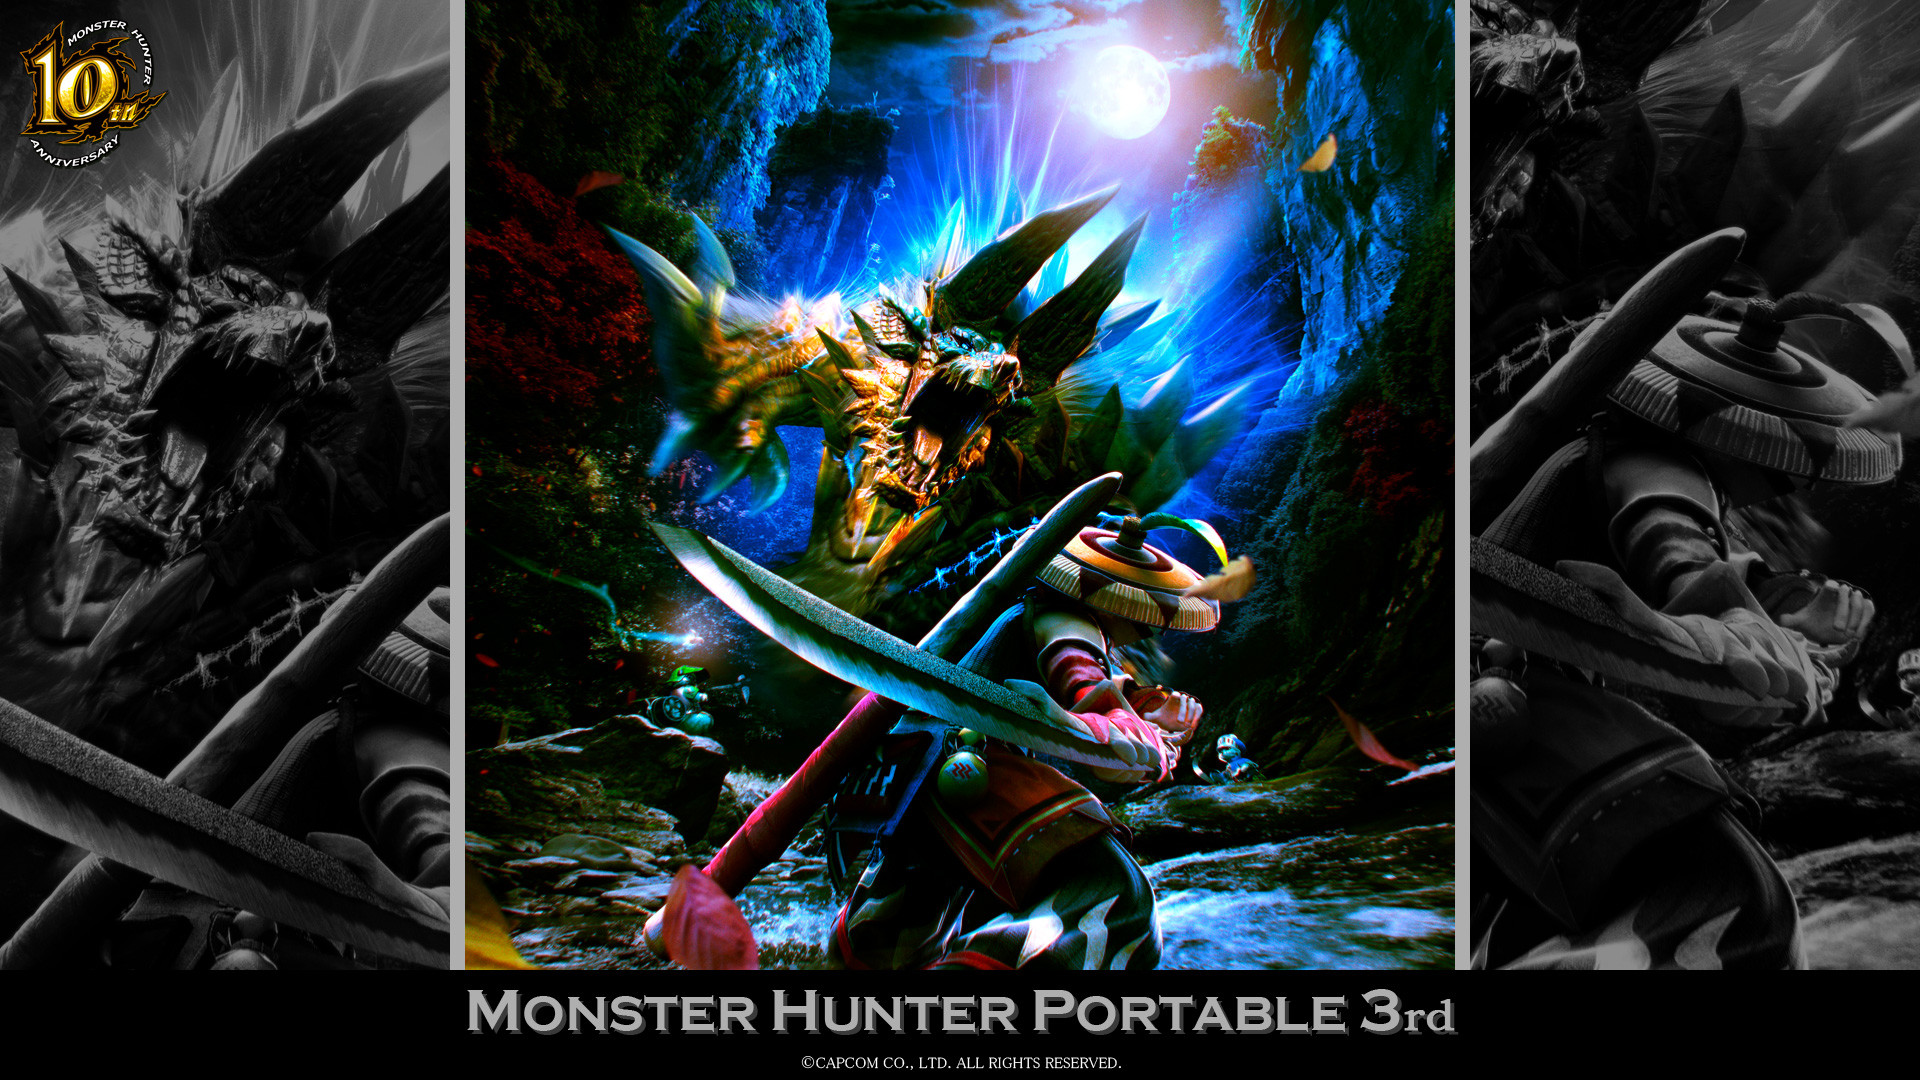 Mh 10th Anniversary-monster Hunter Portable 3rd Wallpaper - Monster Hunter Portable 3rd Official Soundtrack - HD Wallpaper 